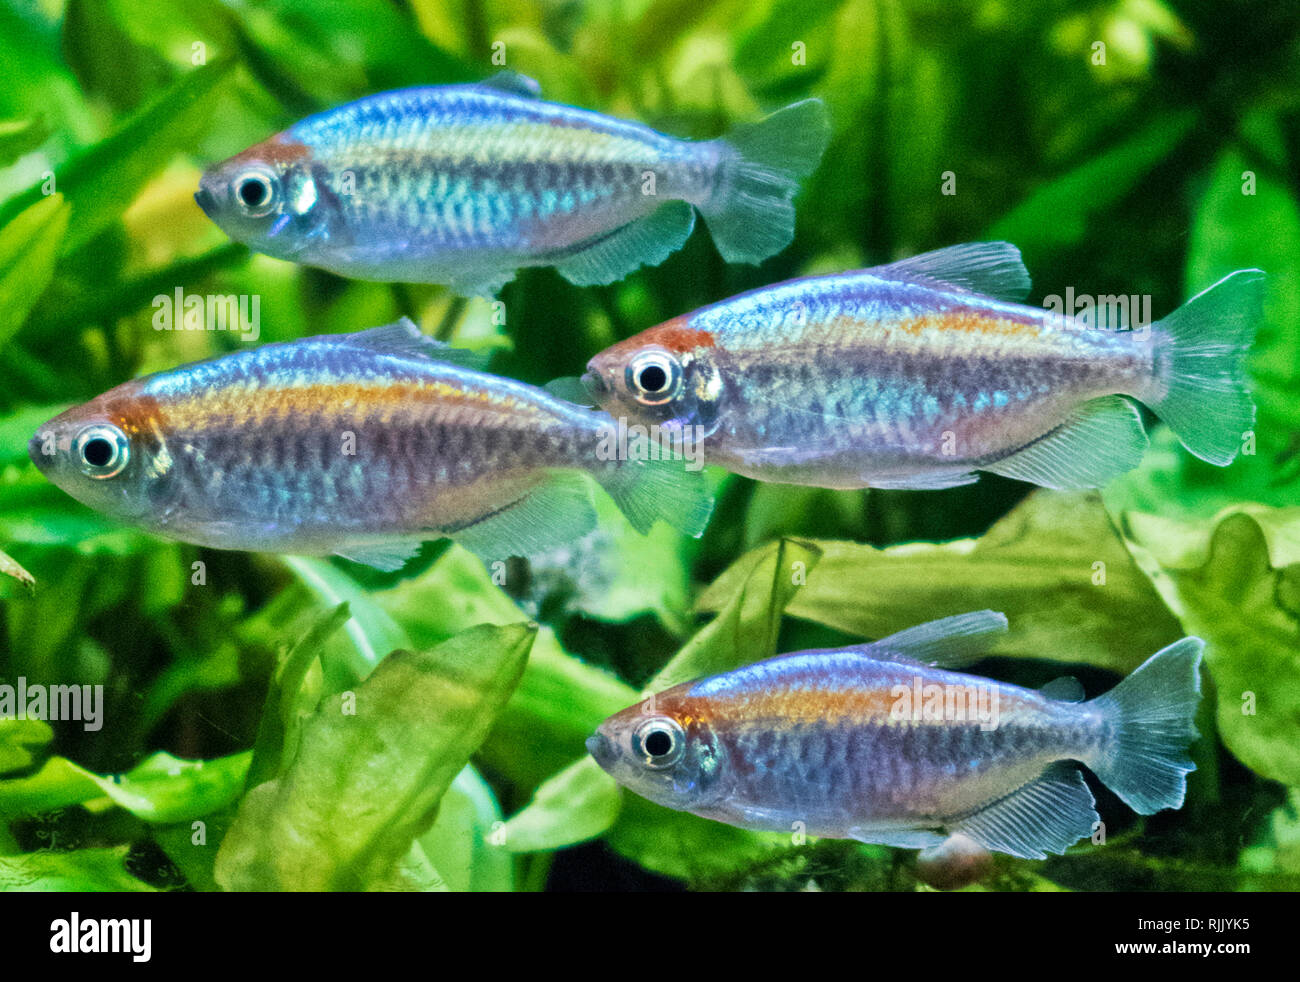 Shoaling Congo Tetras Tropical Freshwater Fish ( Phenacogrammus interruptus ) Stock Photo